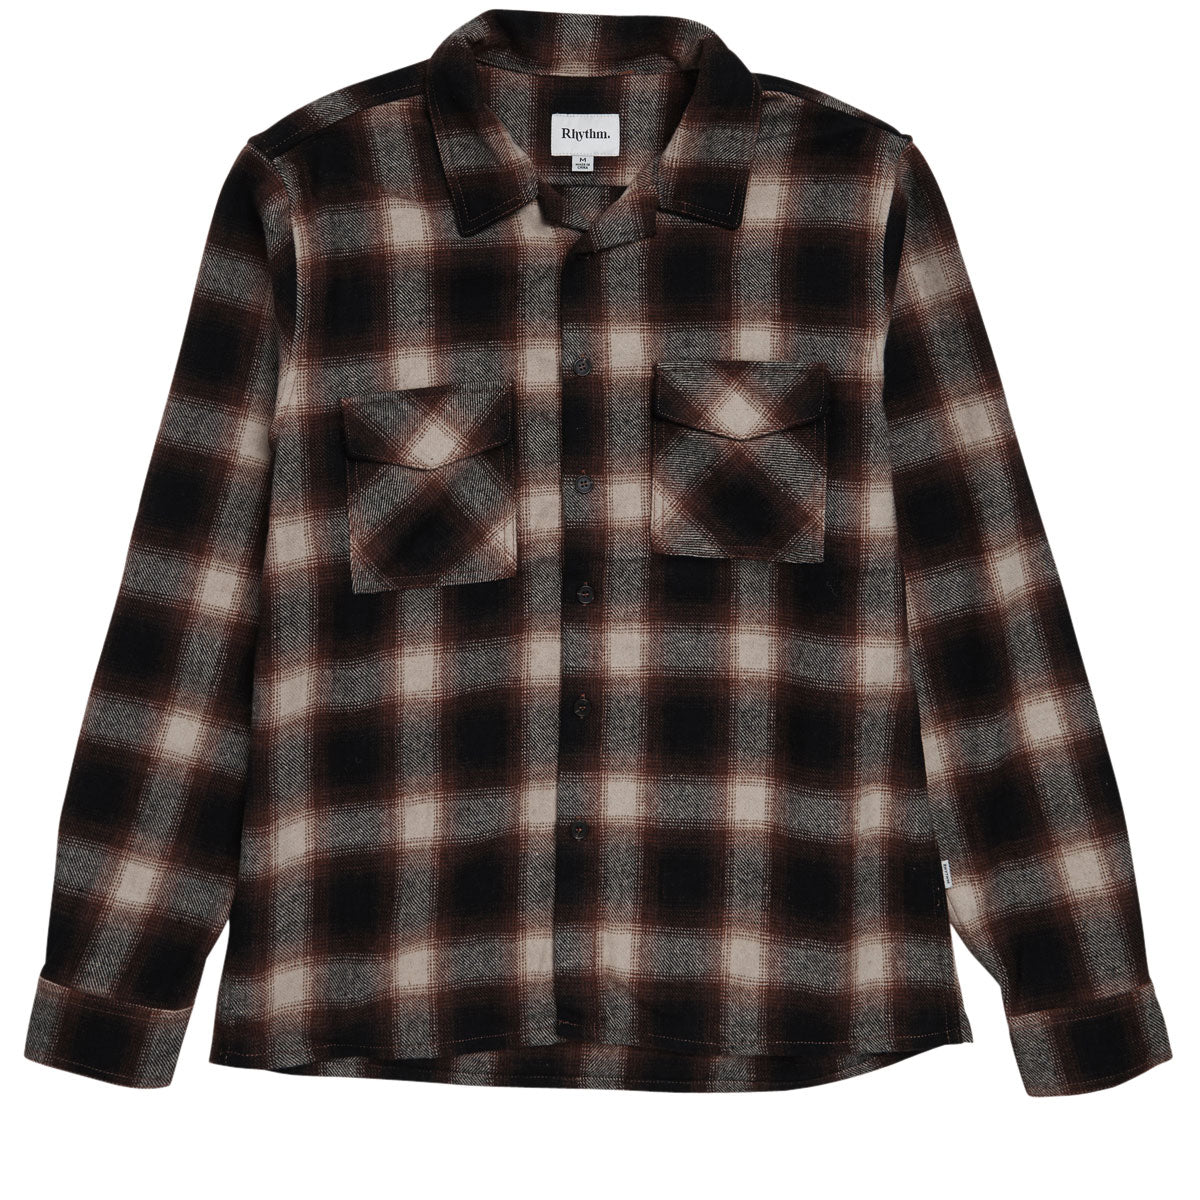 Rhythm Plaid Flannel Long Sleeve Shirt - Rust image 1